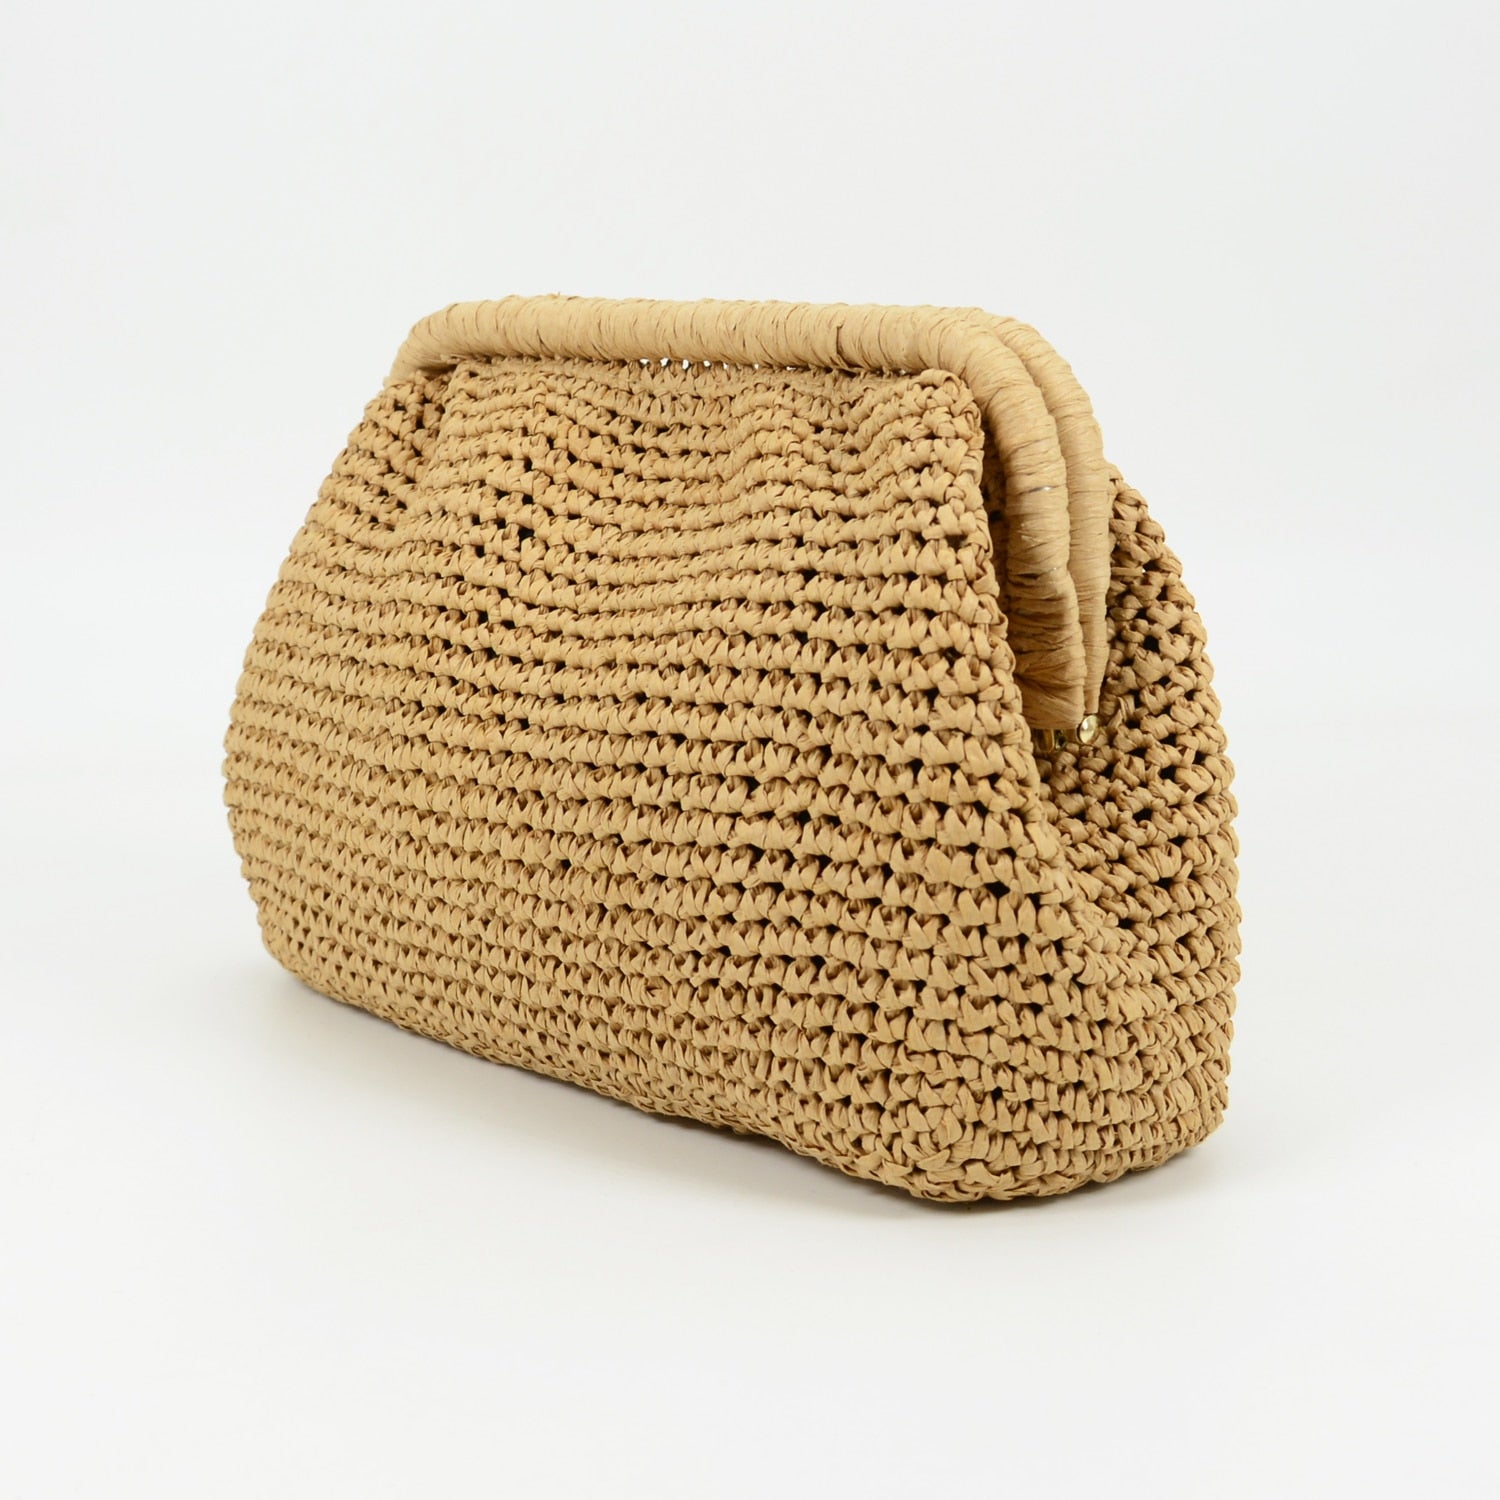 TEEK - Handmade Crocheted Raffia Straw Clutch BAG theteekdotcom   